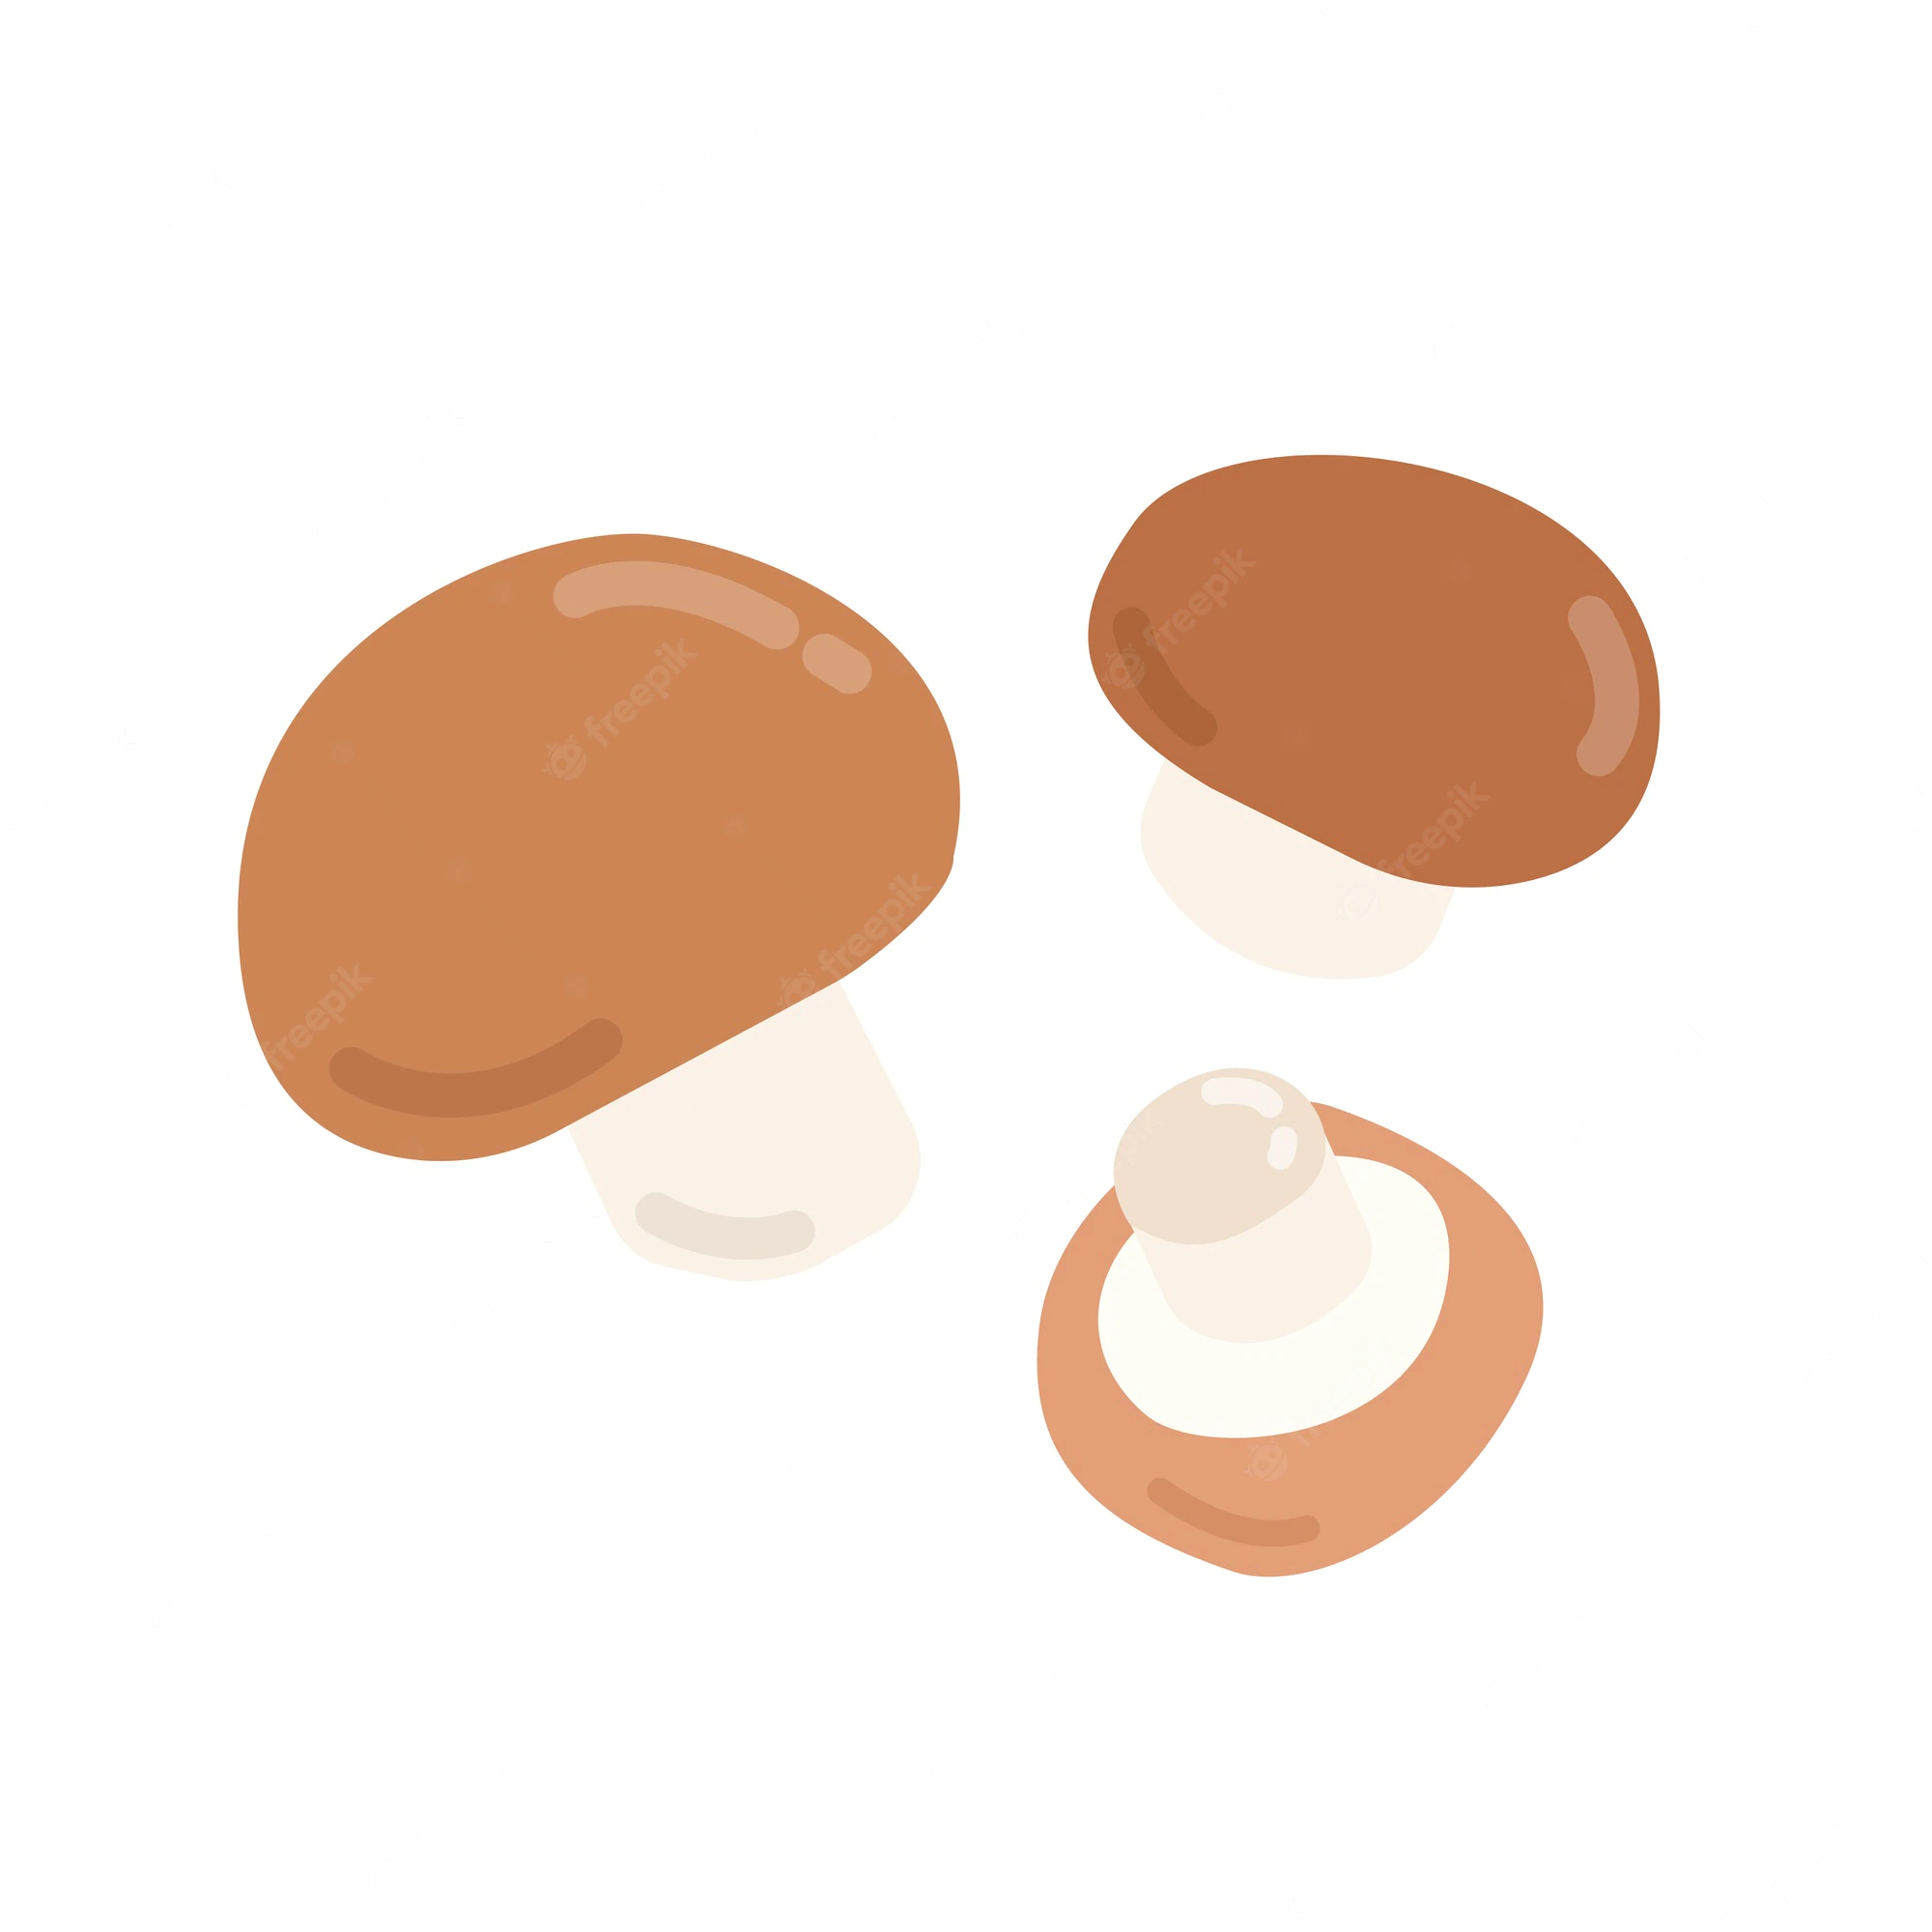 three-brown-mushrooms-graphic-illustration_53876-8471.webp